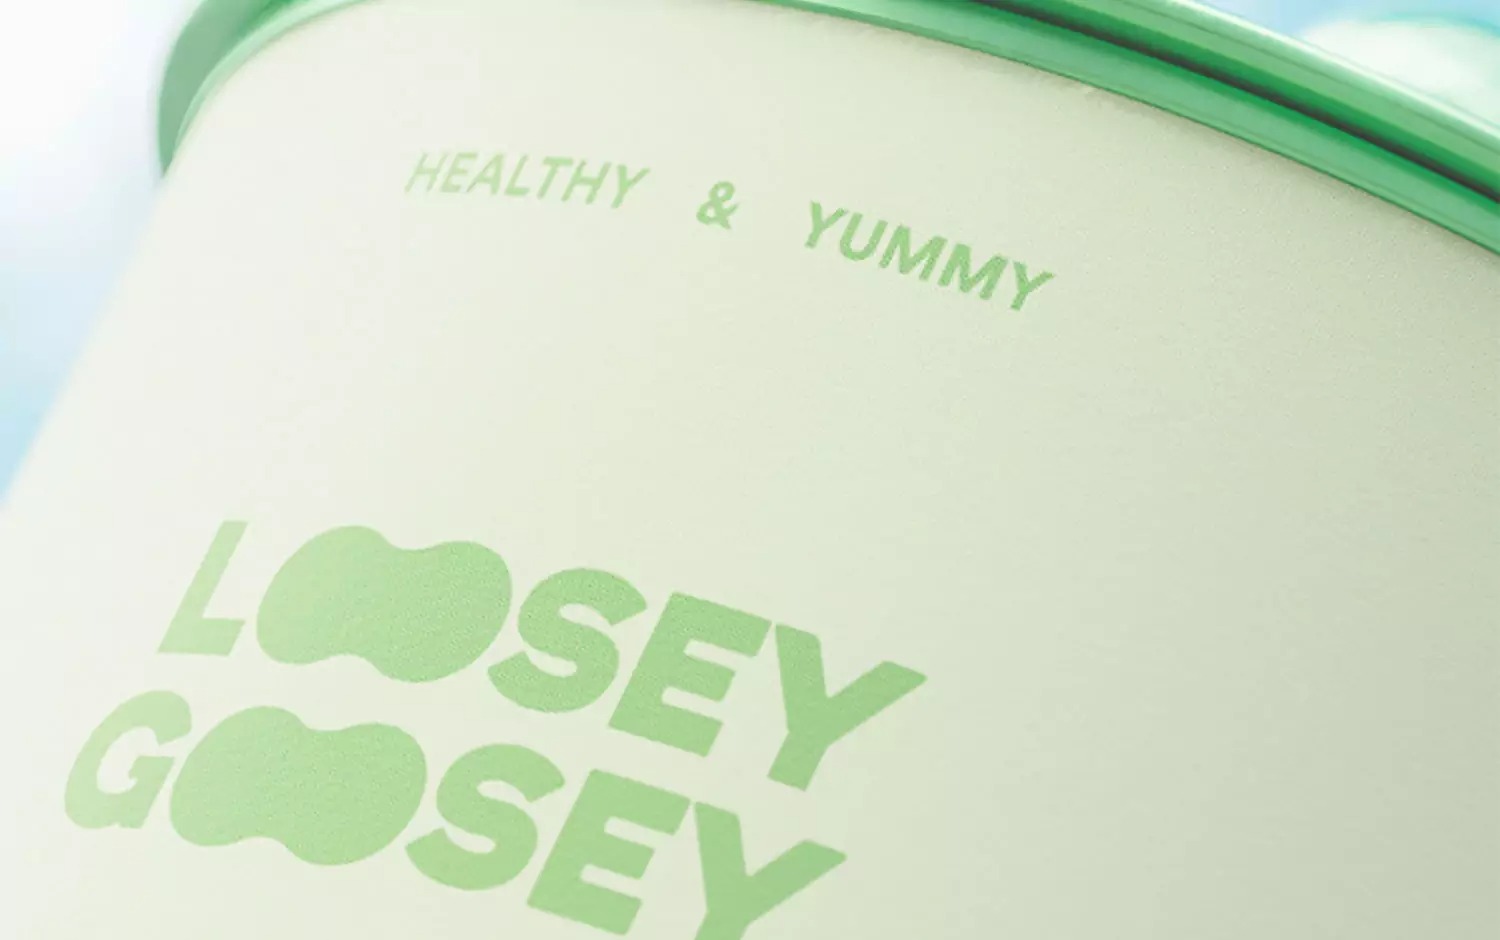 Loosey-Goosey发酵粉品牌包装设计